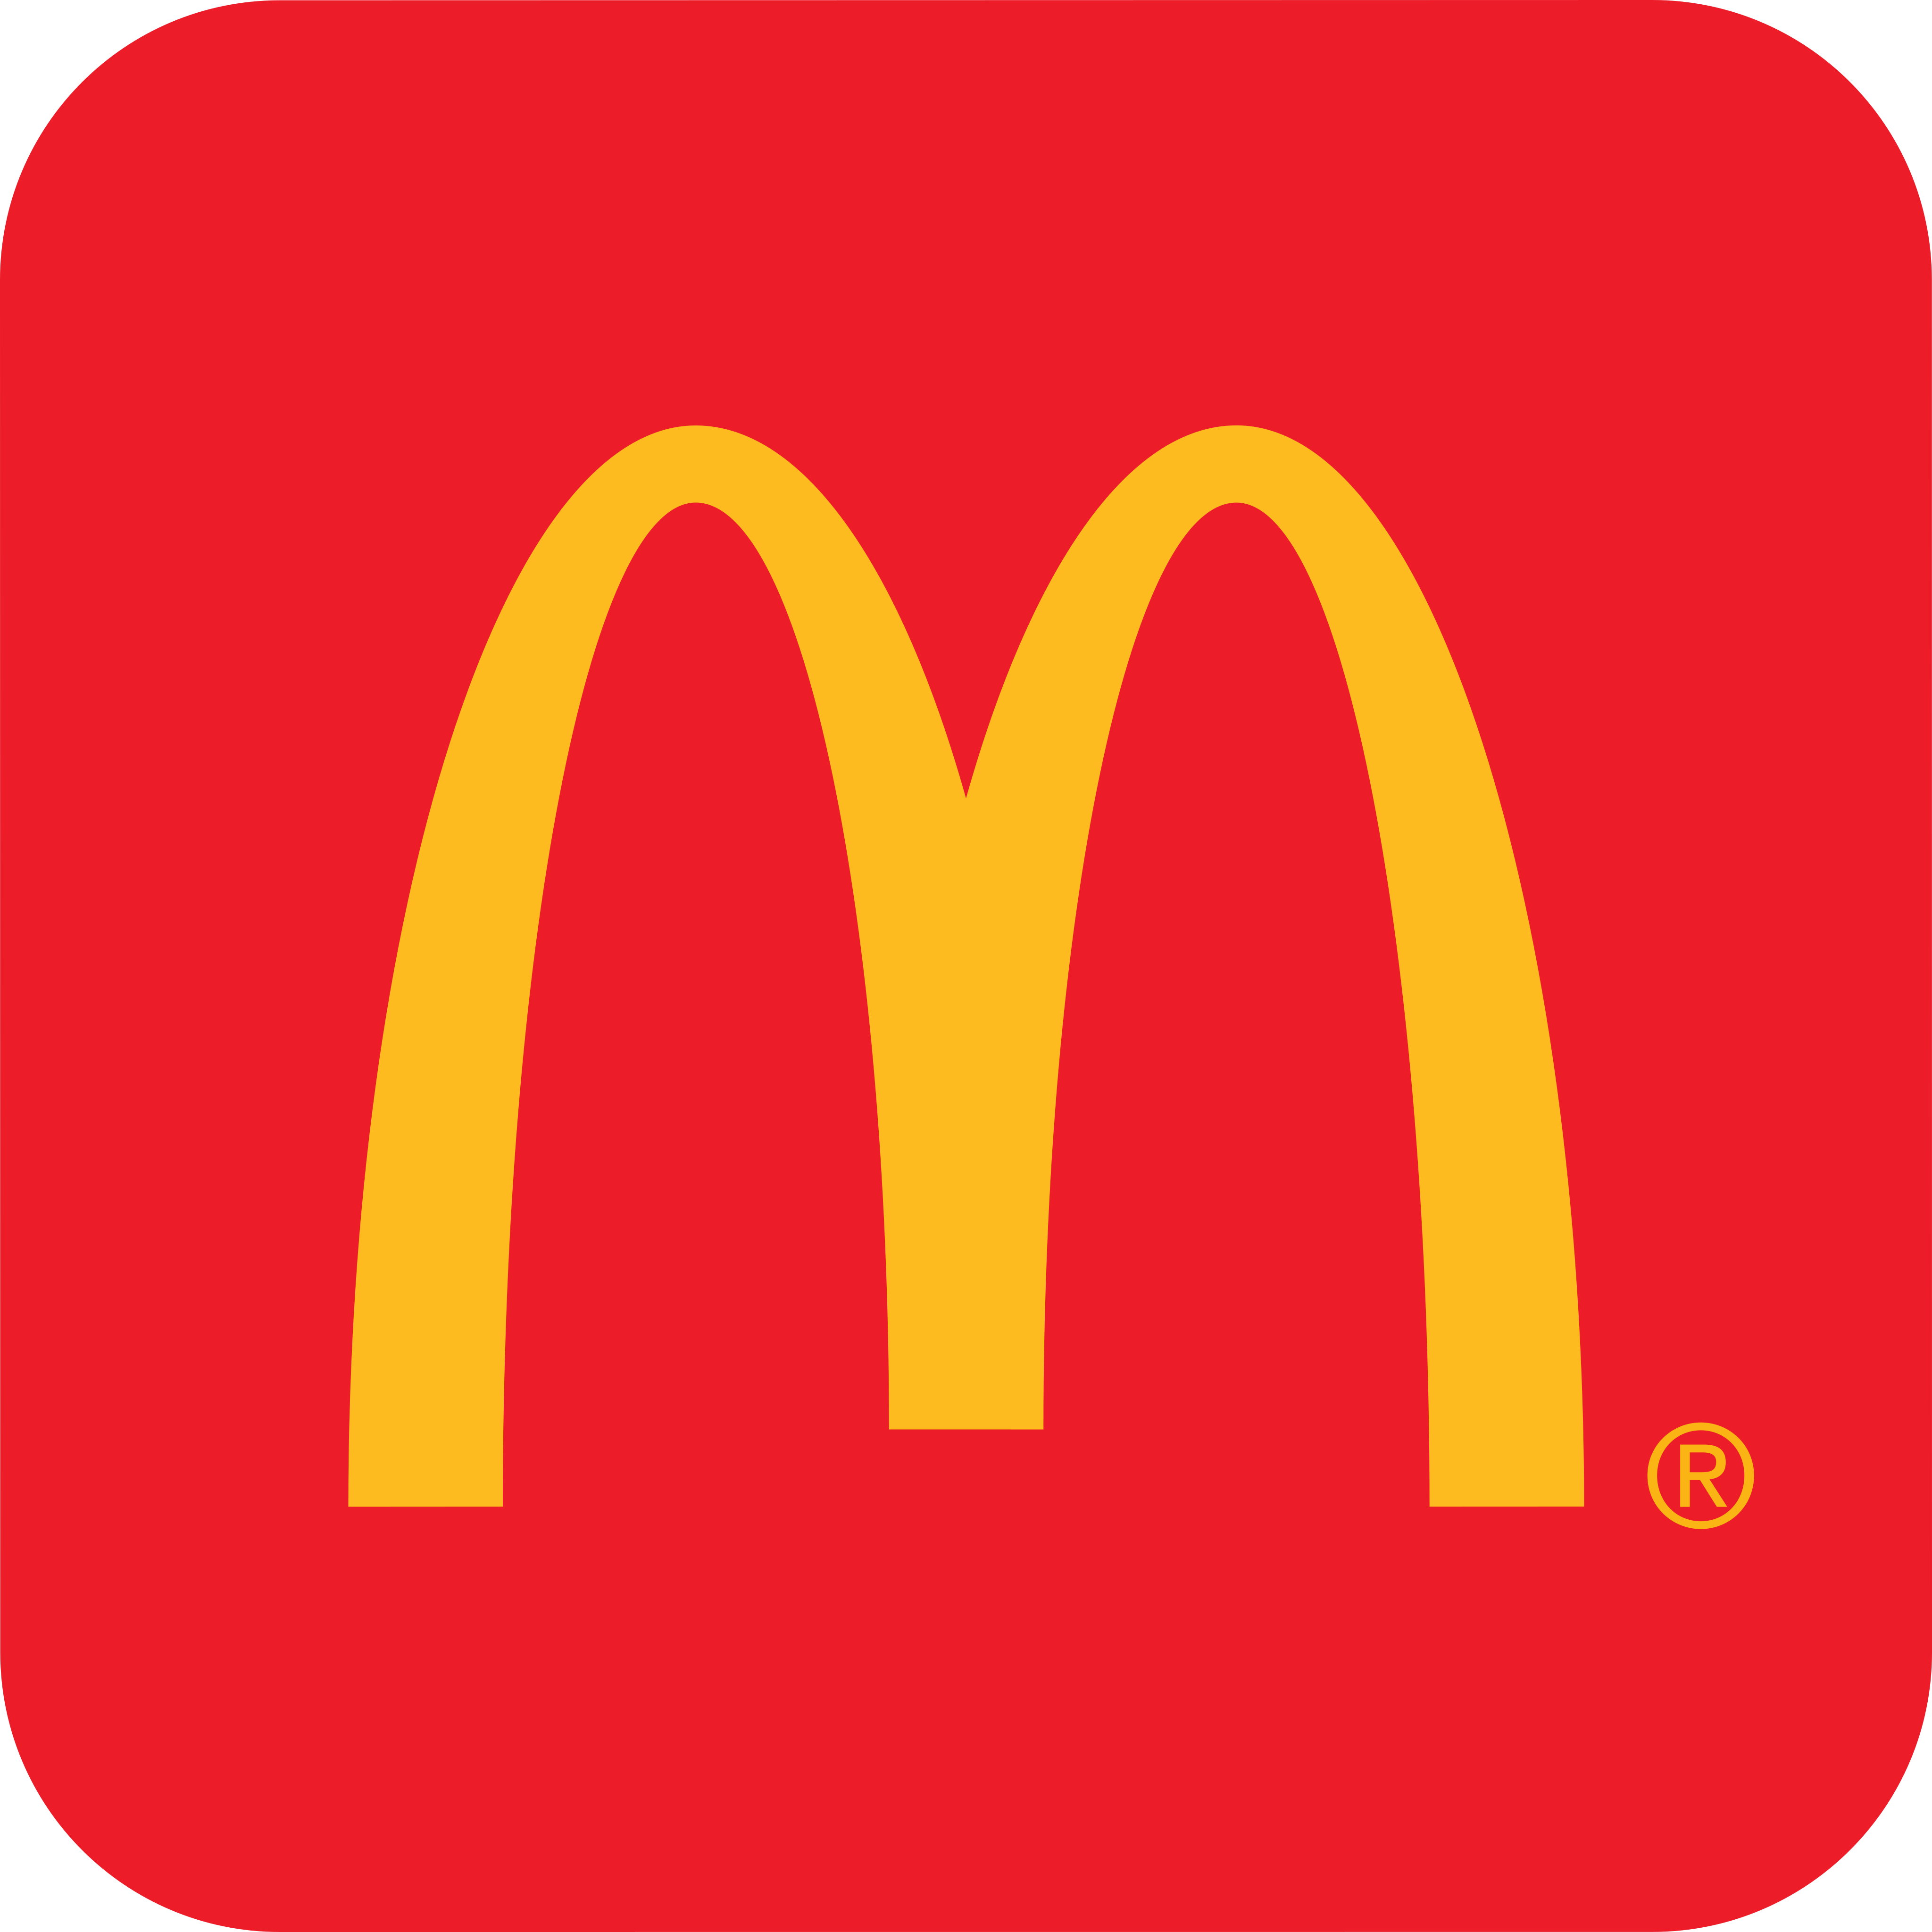 mcdonalds logo 8 - McDonald's Logo